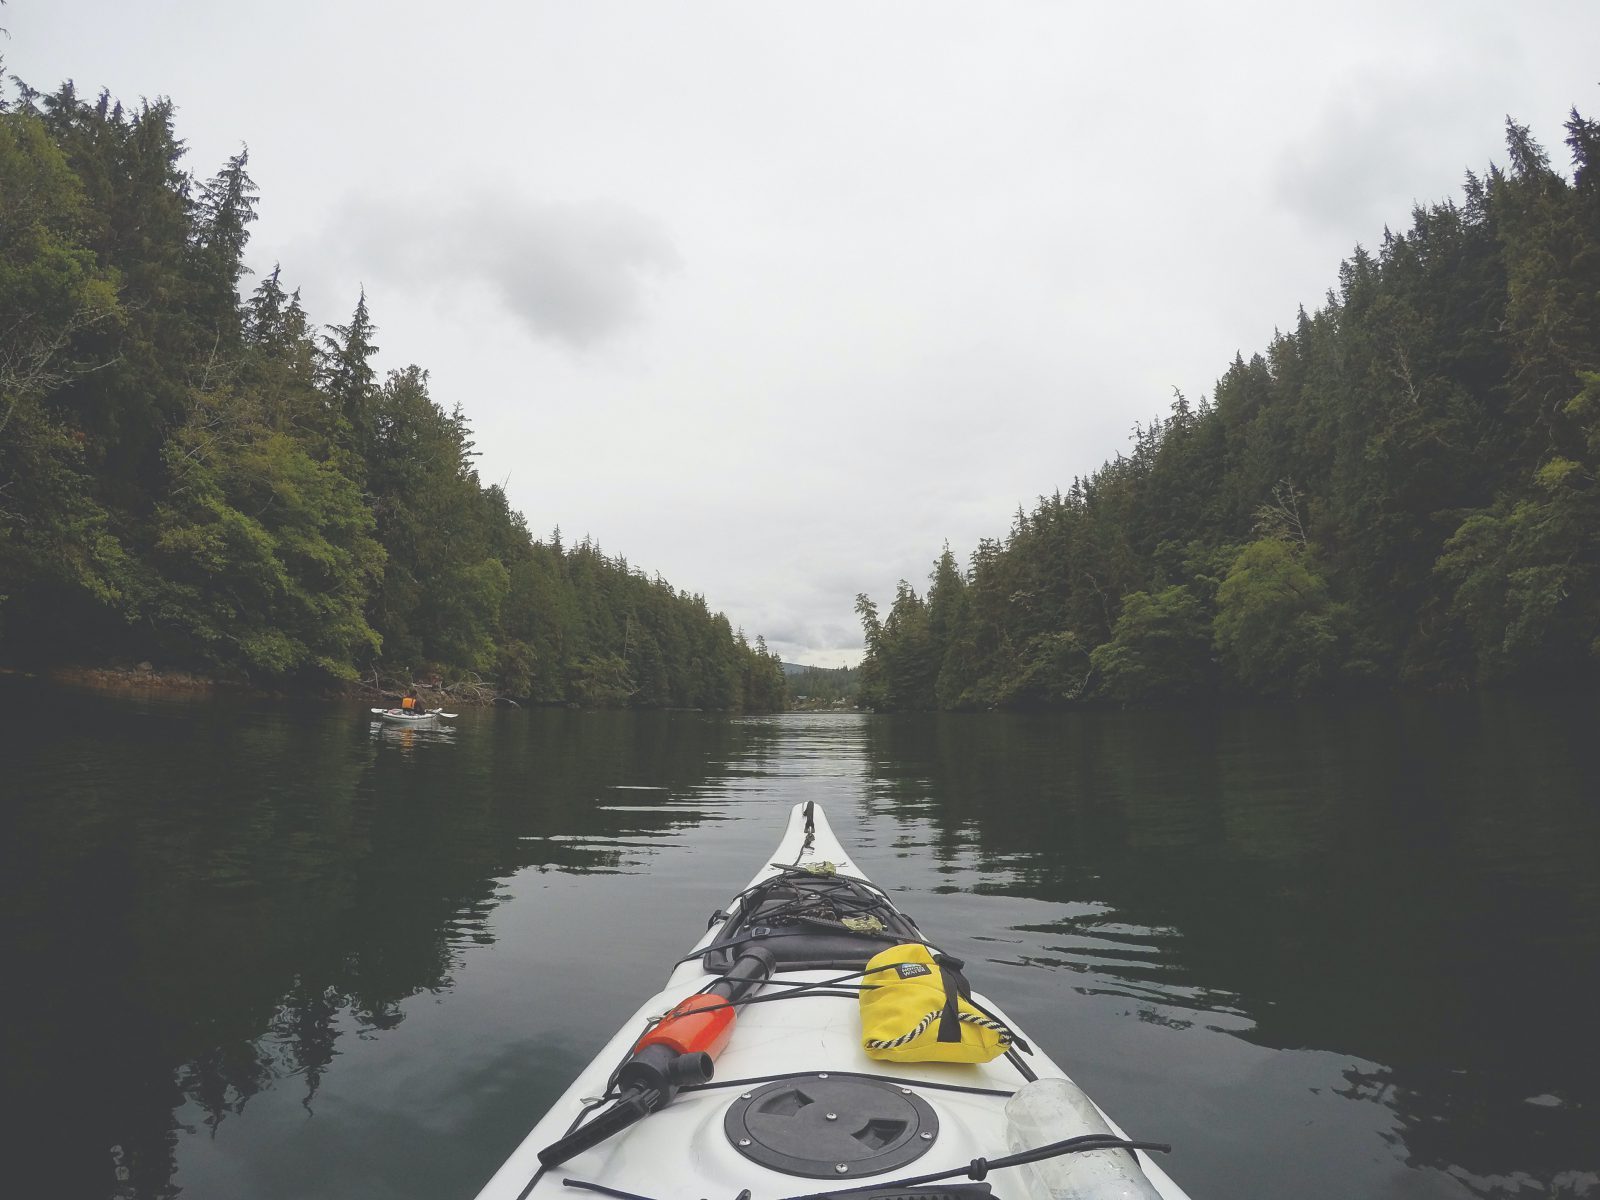 activities on waterbody - having fun - clients - kayaking - lake scenic